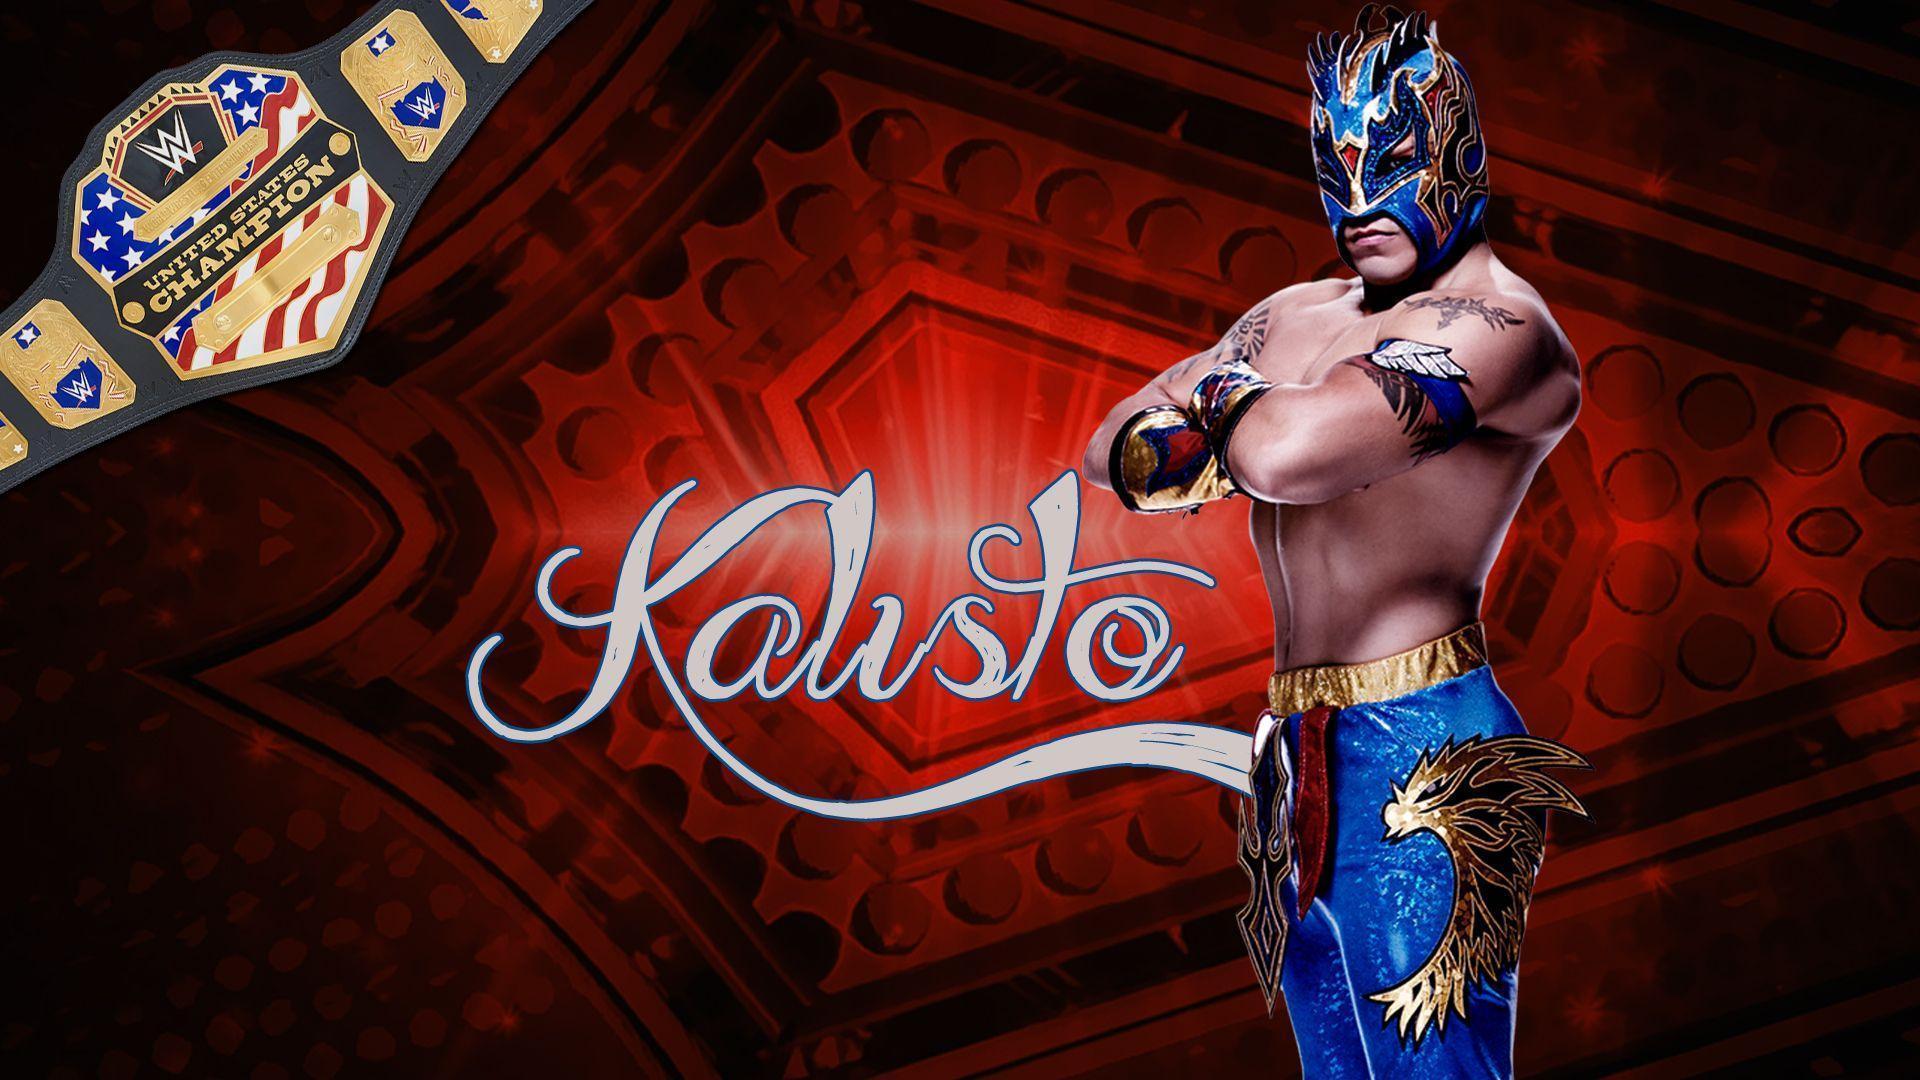 WWE kalisto HD Wallpaper & Picture. Live HD Wallpaper HQ